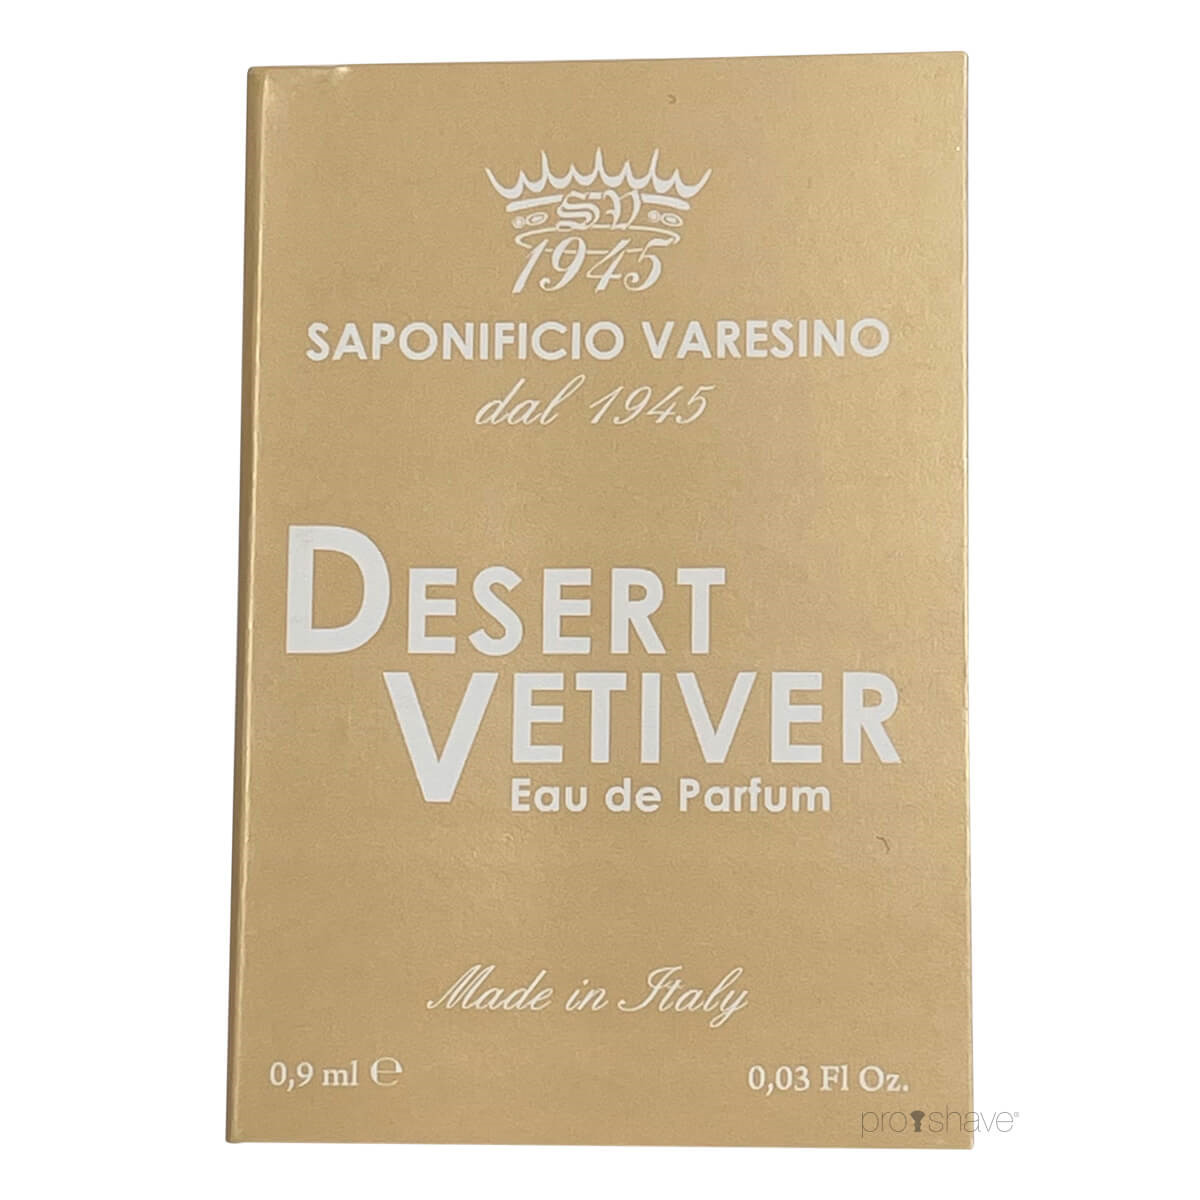 Billede af Saponificio Varesino Eau de Parfum, Desert Vetiver, Sample, 0.9 ml.